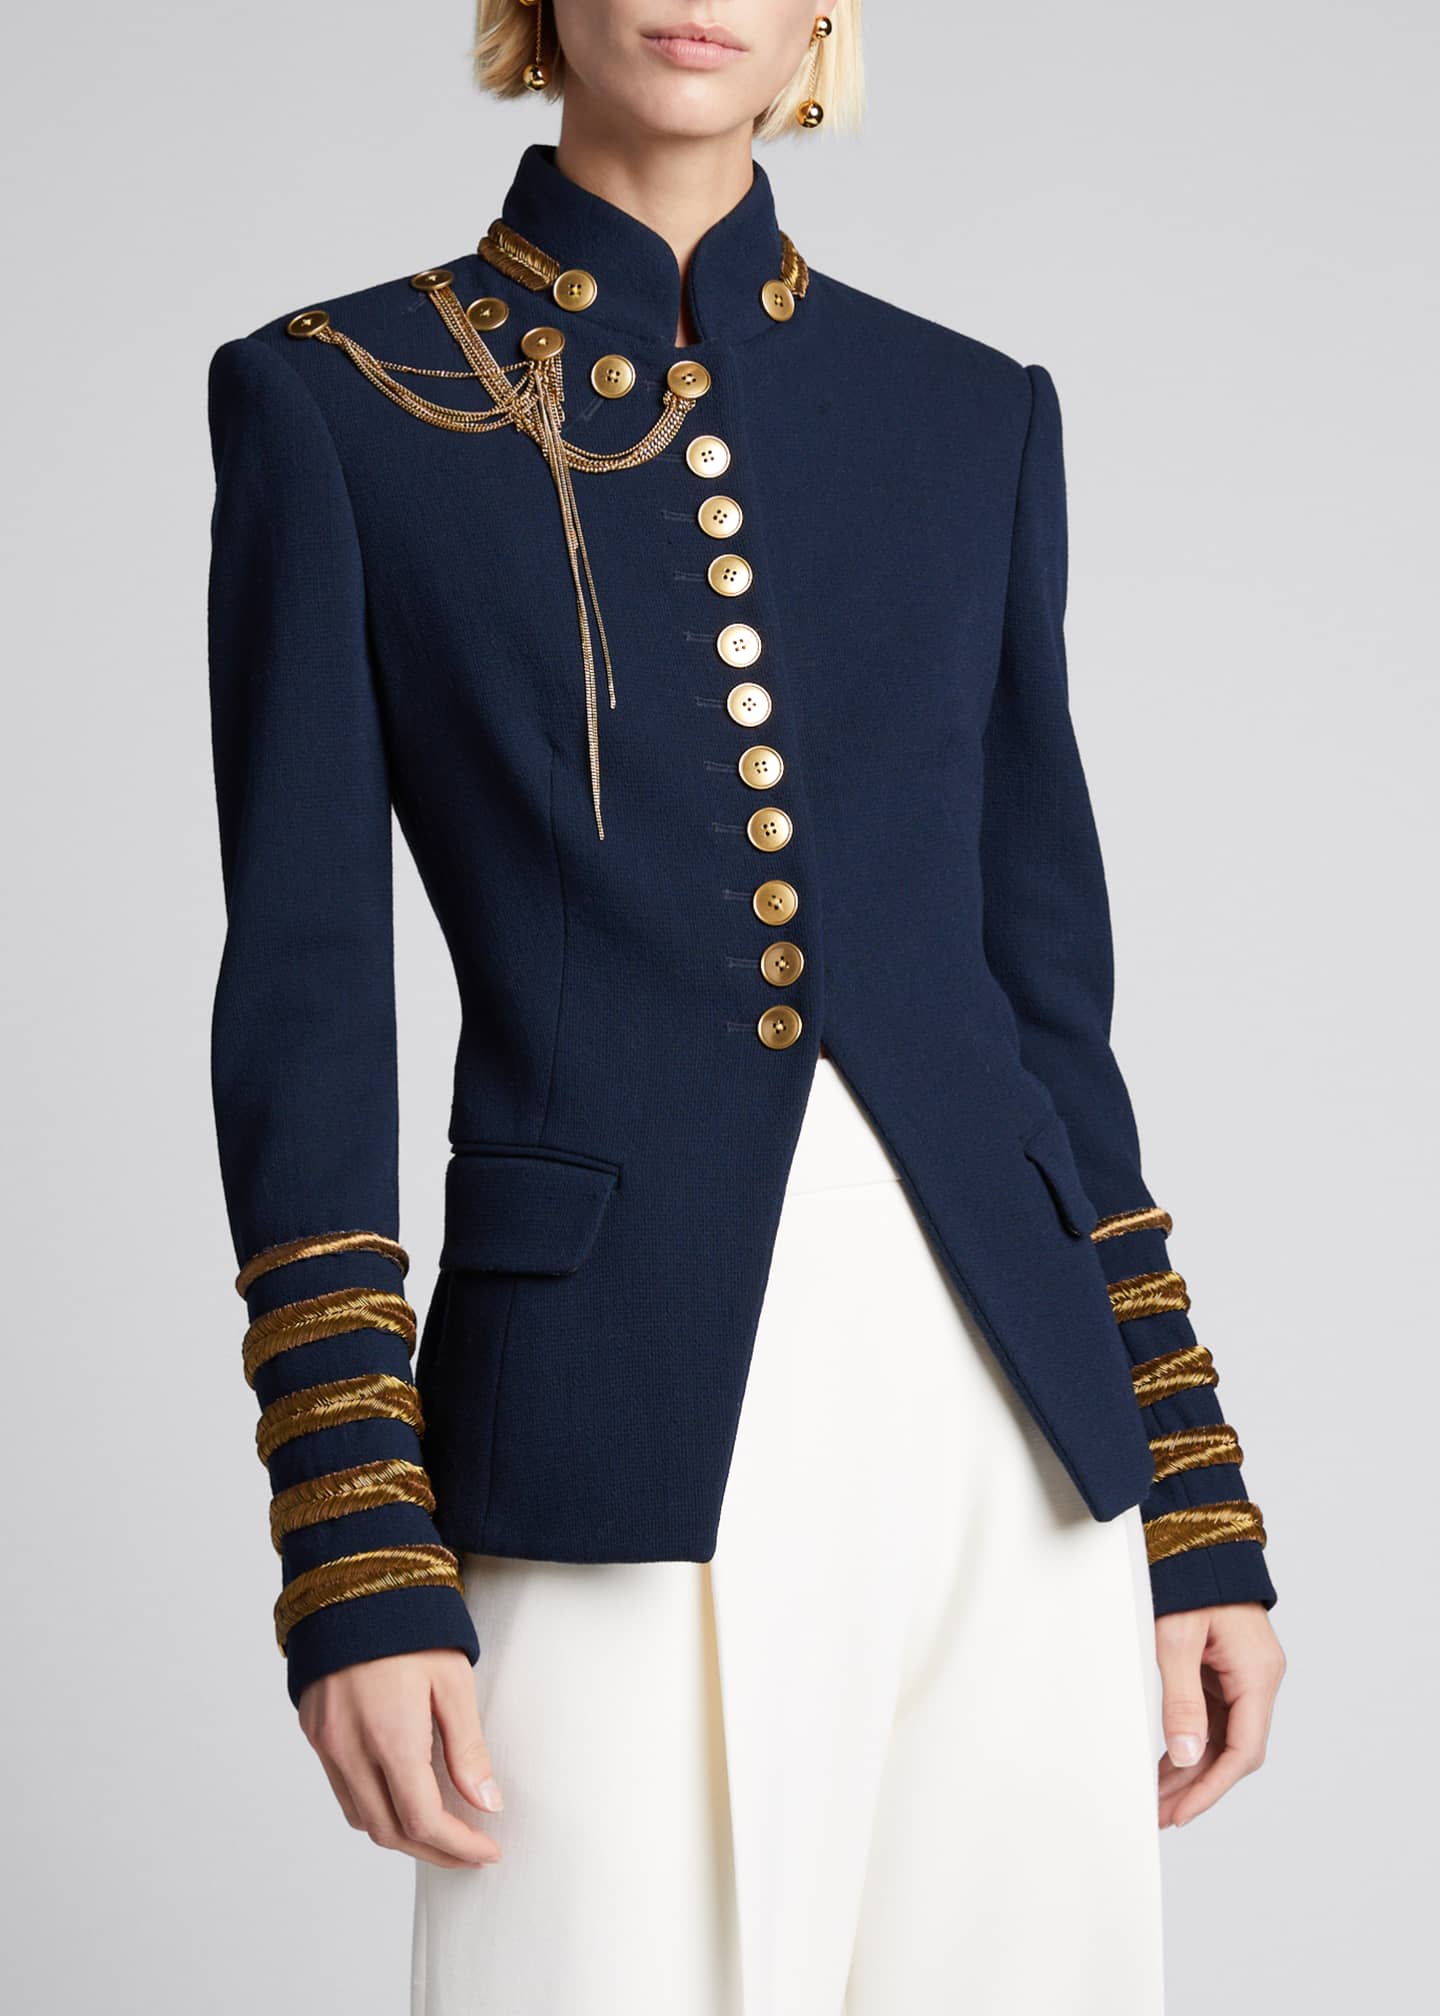 Oscar de la Renta Sailor Jacket with Golden Detailing - Bergdorf Goodman